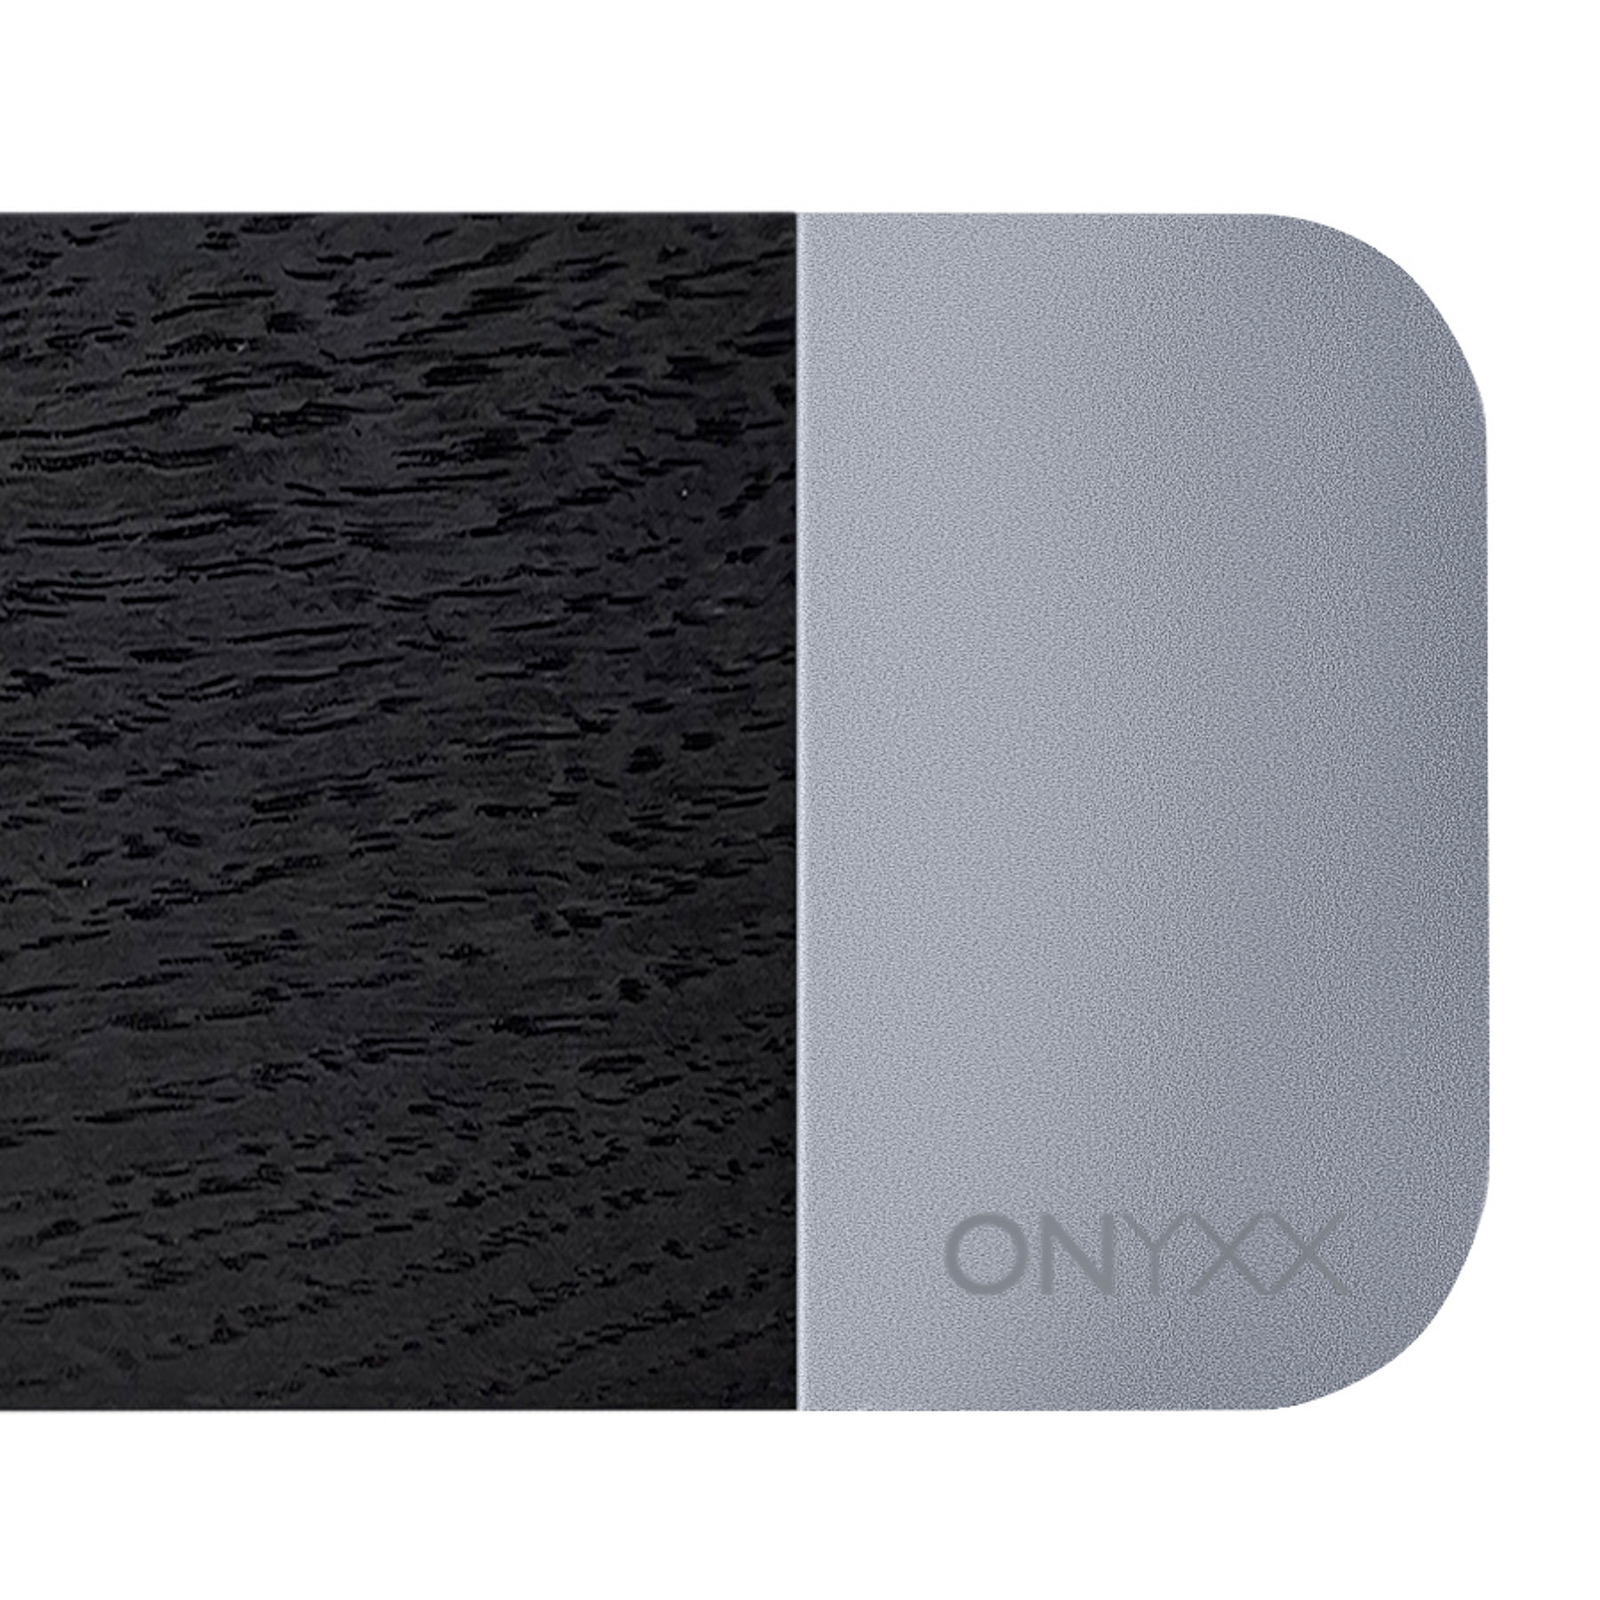 GRIMMEISEN Onyxx Linea Pro močiarny/striebro